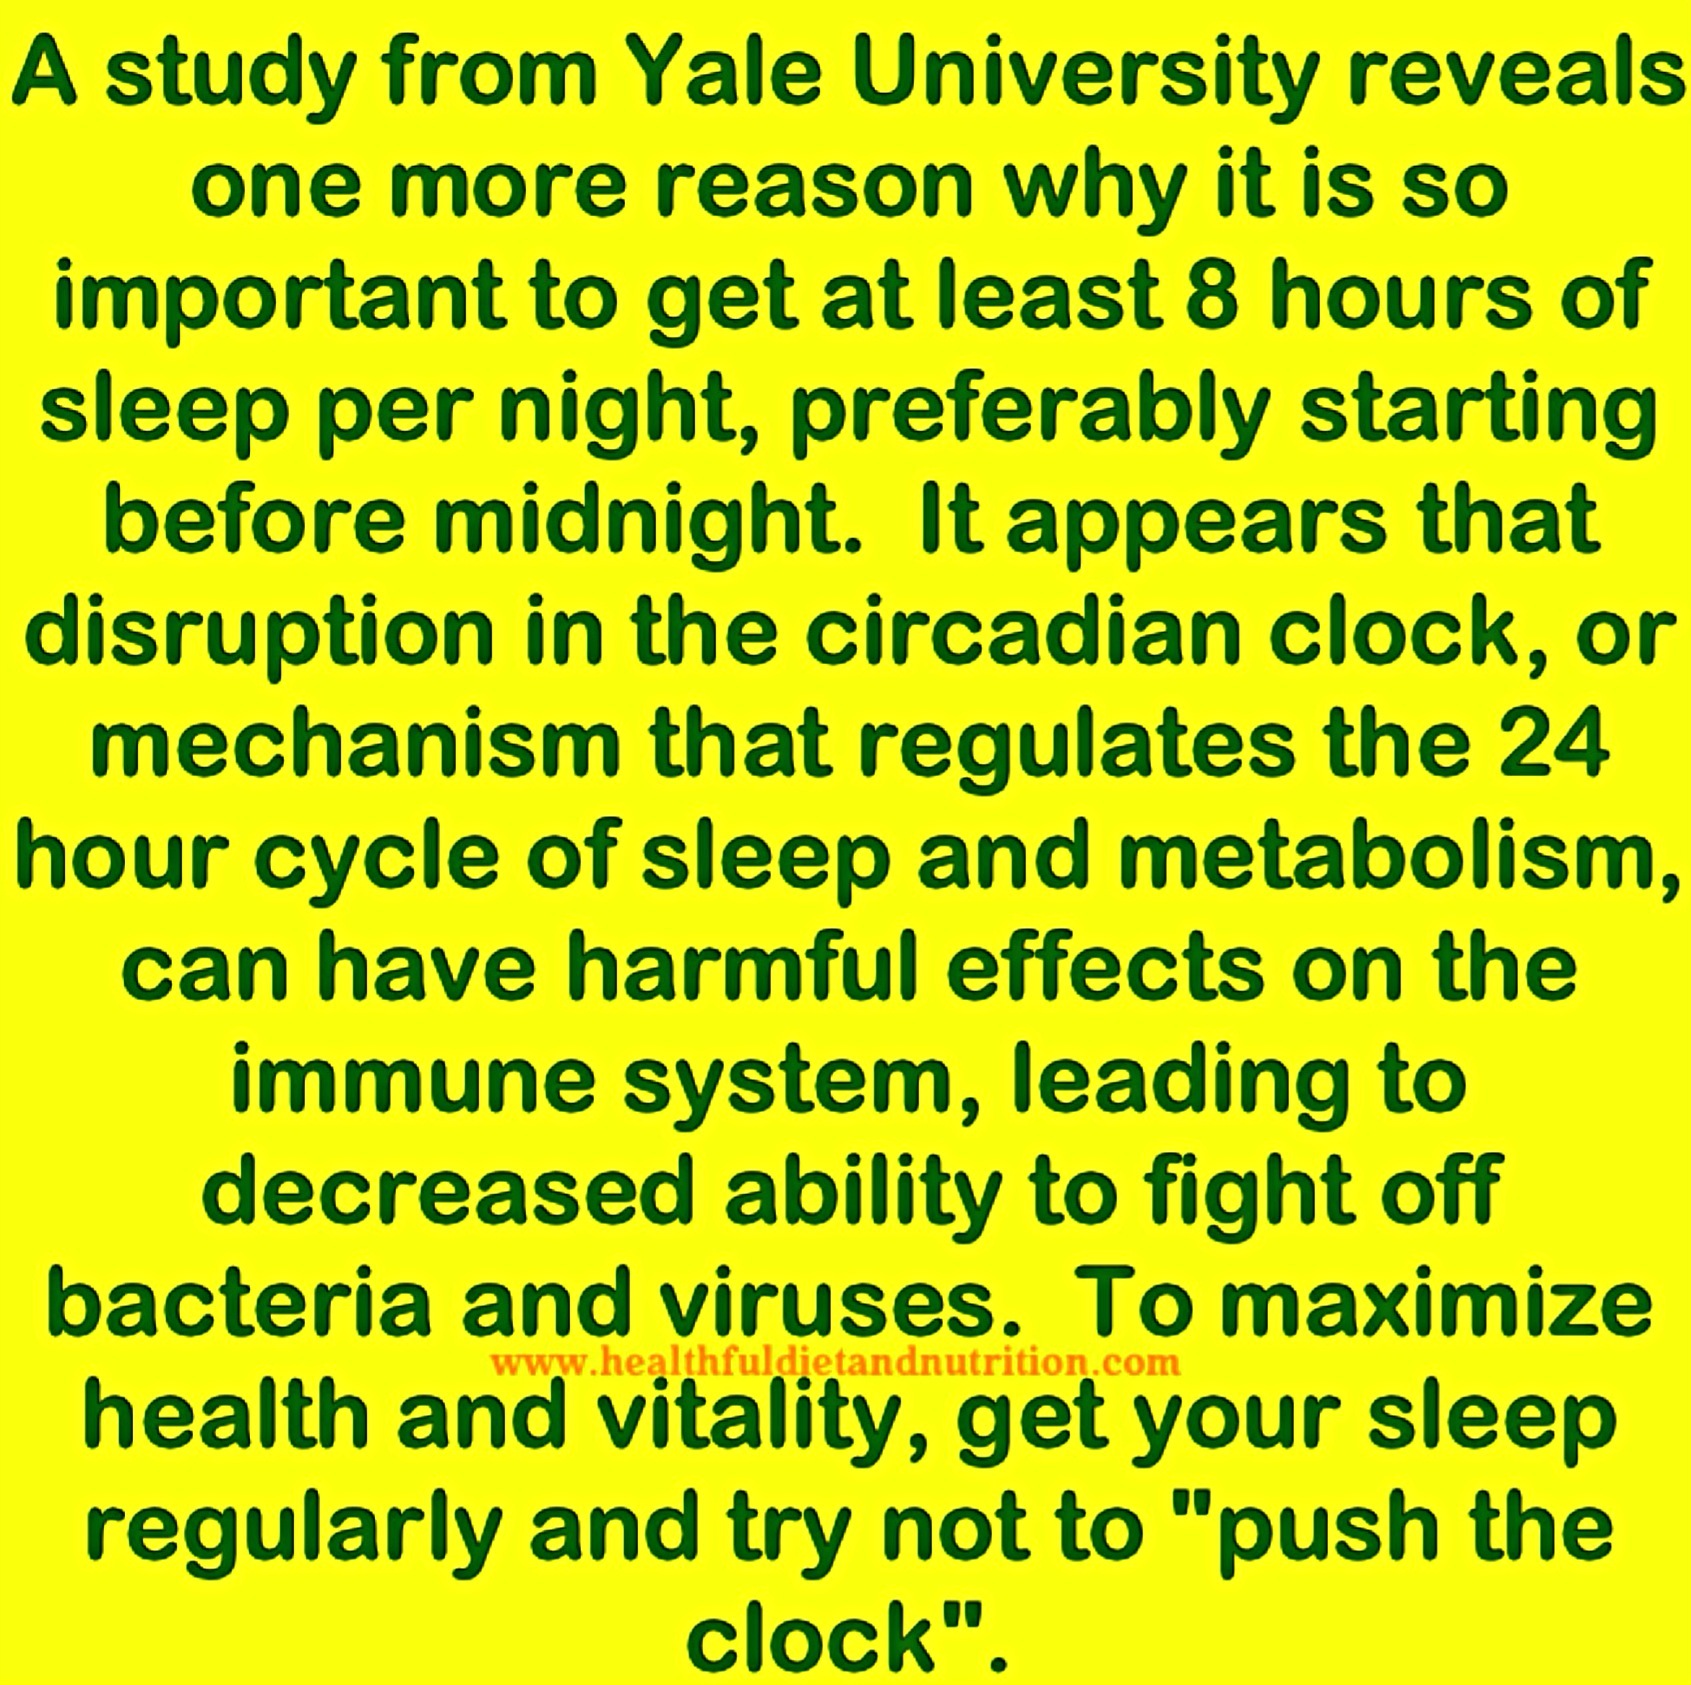 Sleep Regularly To Maximize Health And Vitality